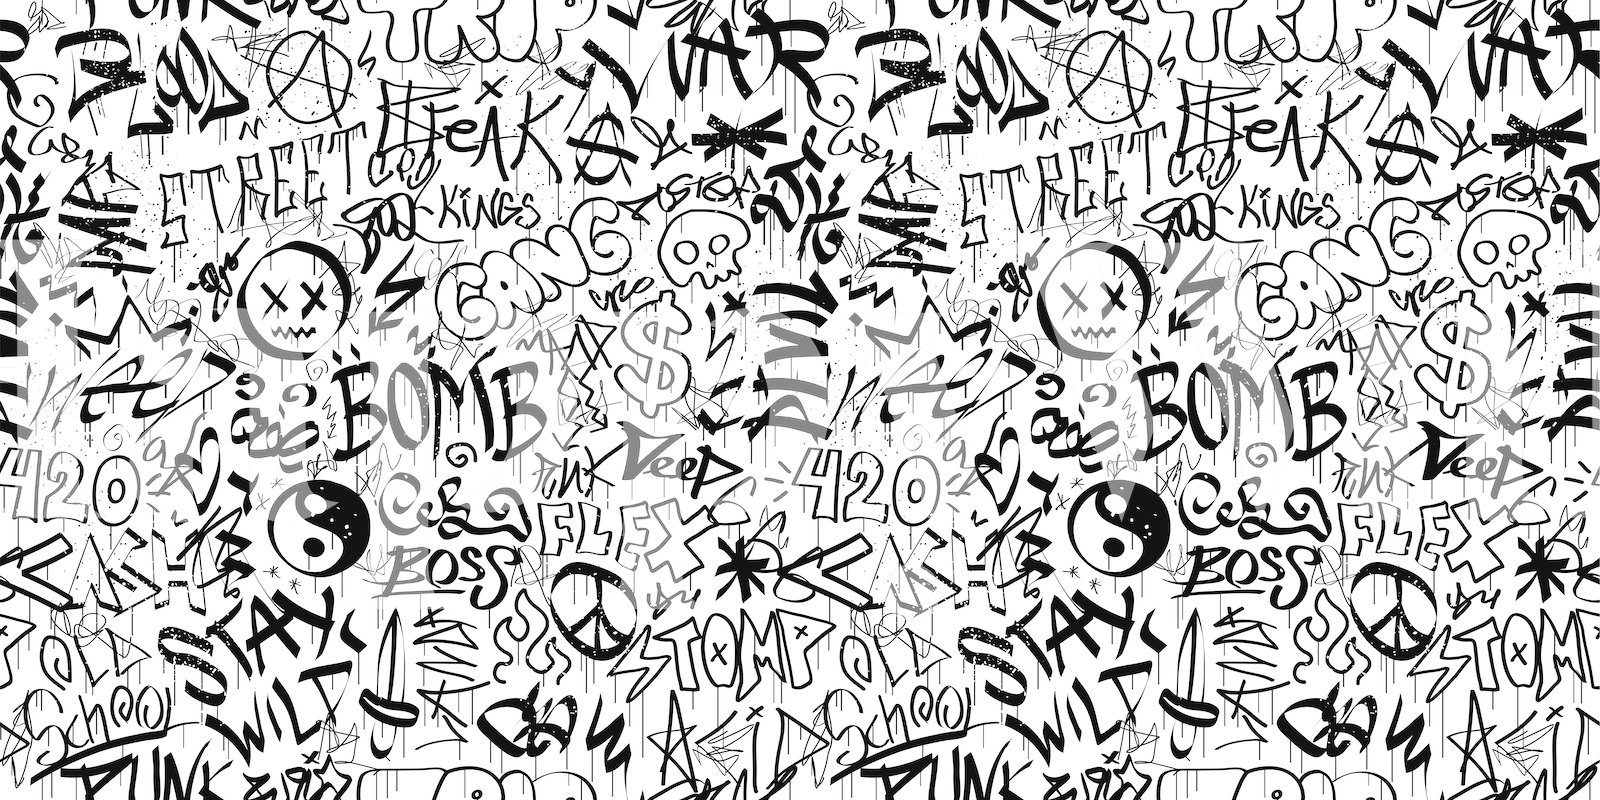 Graffiti lettering wallpaper